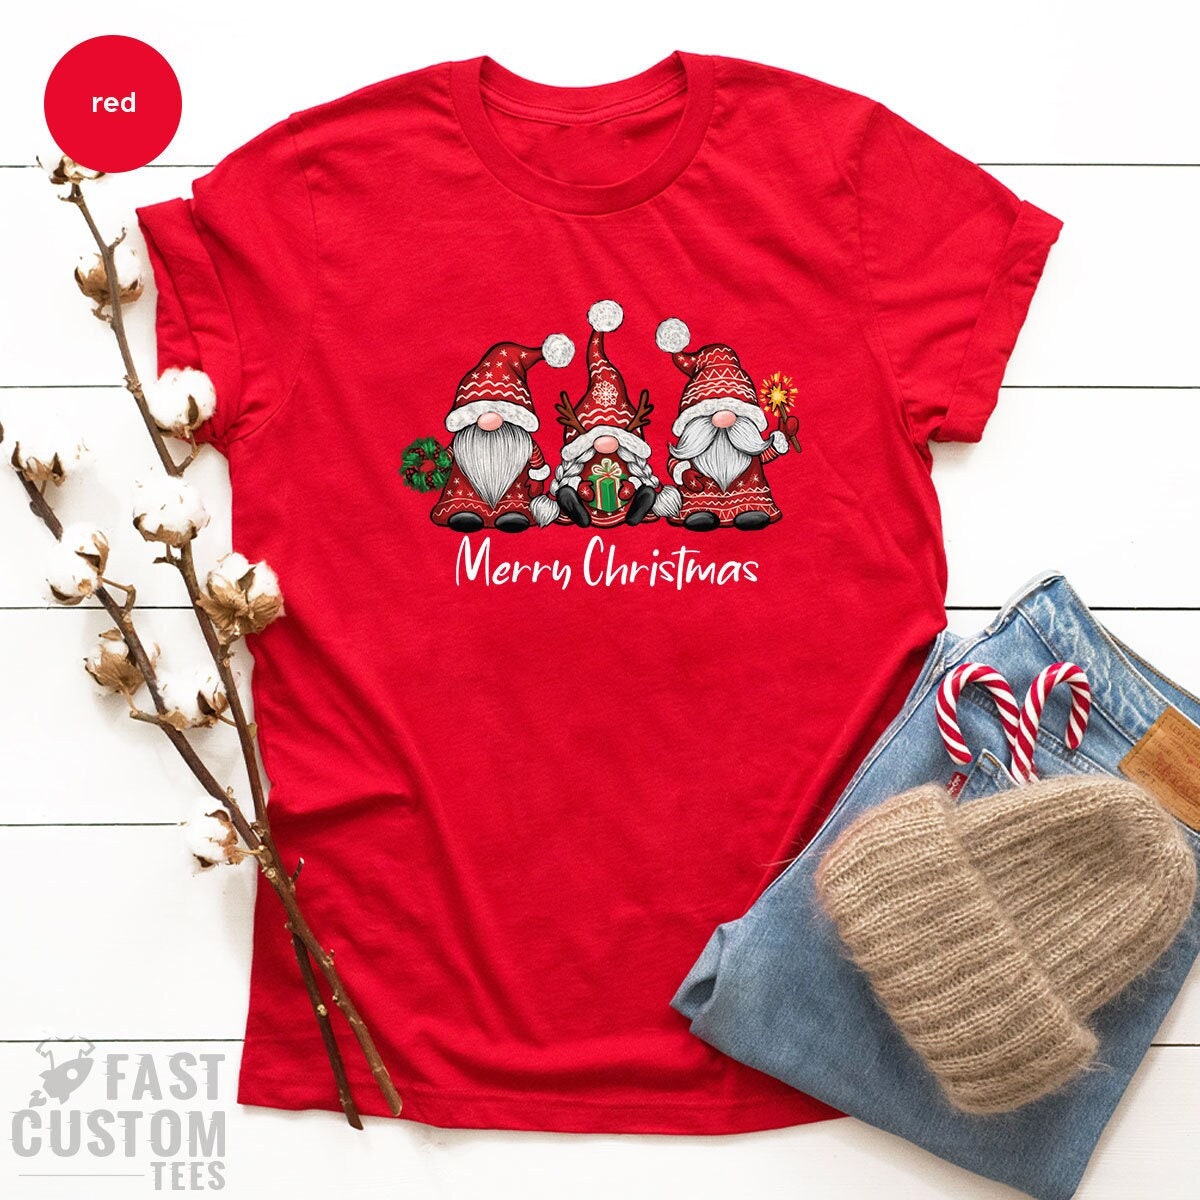 Christmas T-Shirt, Merry Noel Shirt, Women Christmas T-shirt, Christmas Gift, Cute Christmas Tee, Family Christmas Shirt, Merry Cute Shirt - Fastdeliverytees.com